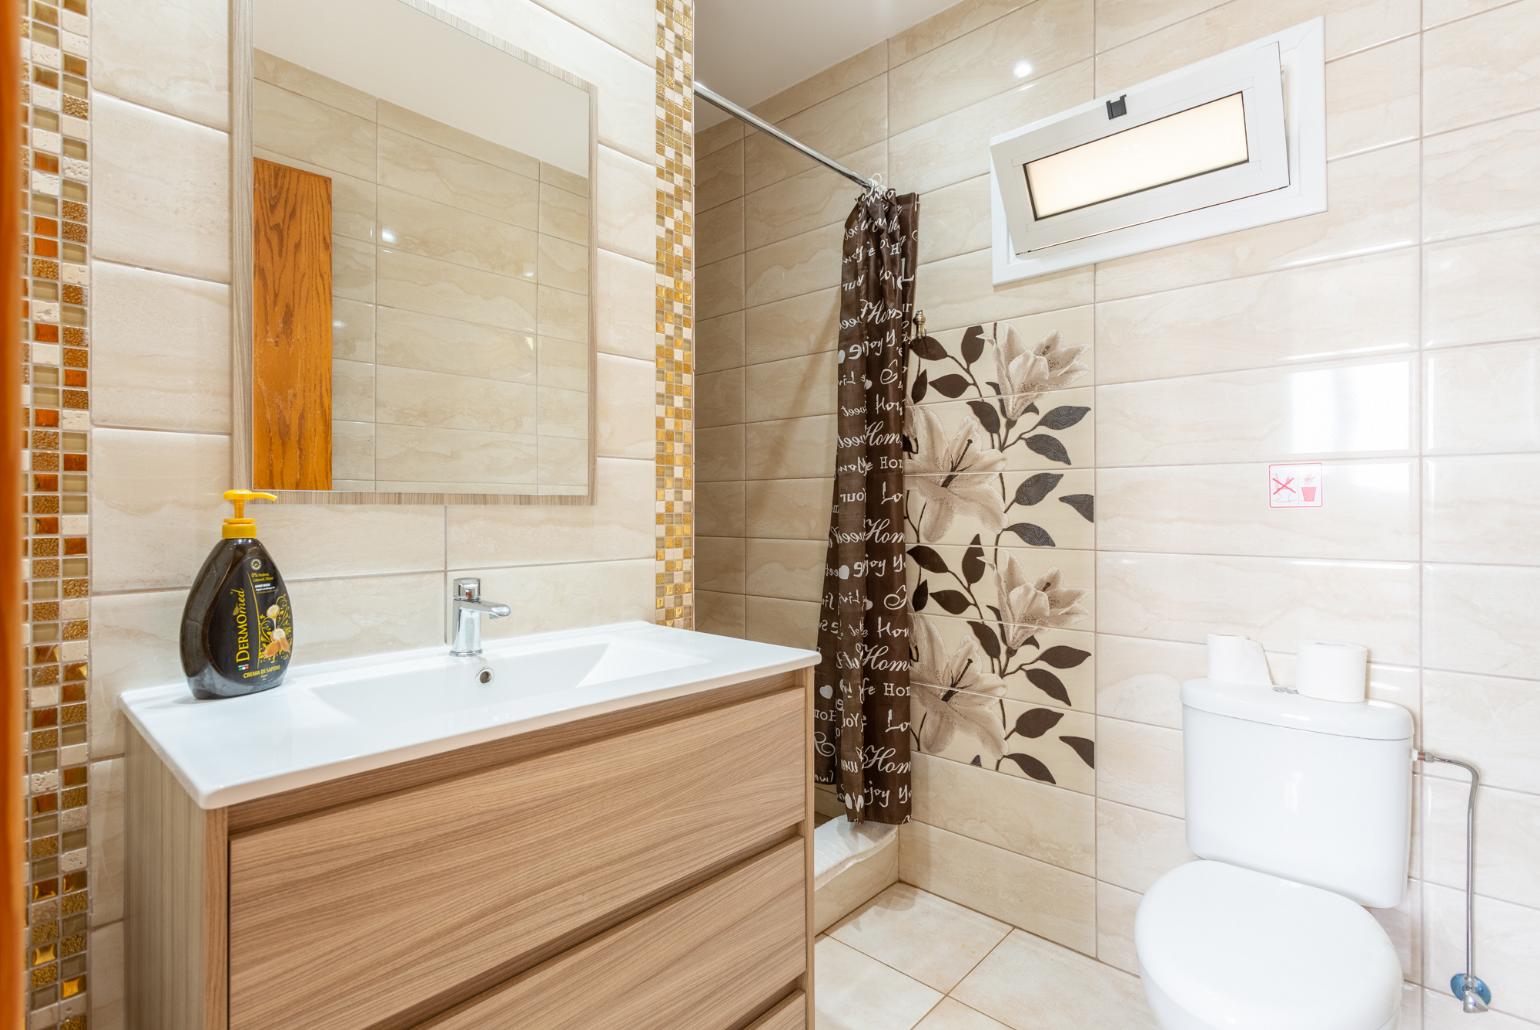 En suite bathroom with shower